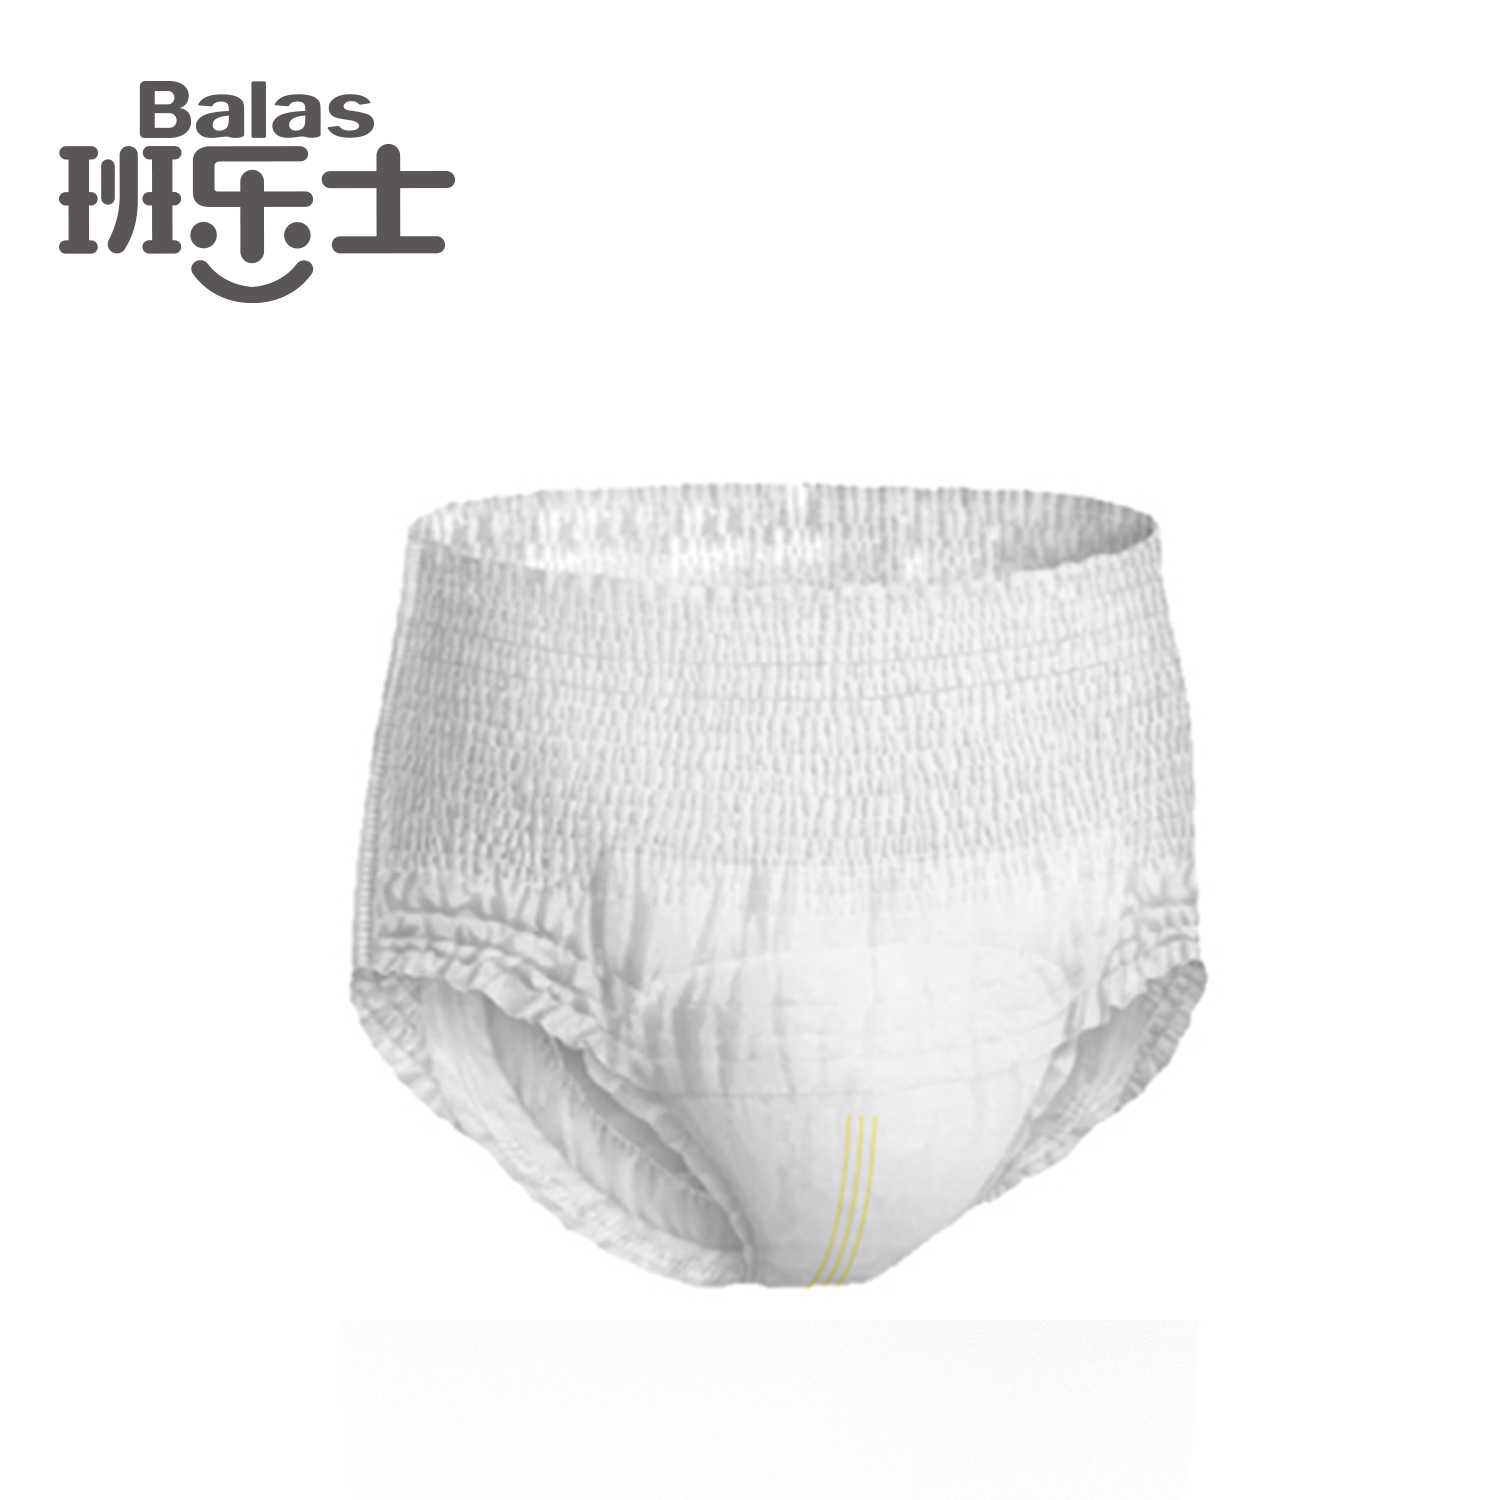 https://cdnus.globalso.com/chiausdiapers/Chiaus-balas-adult-underwear-diapers-pull-up-pants-overnight-use-31.jpg